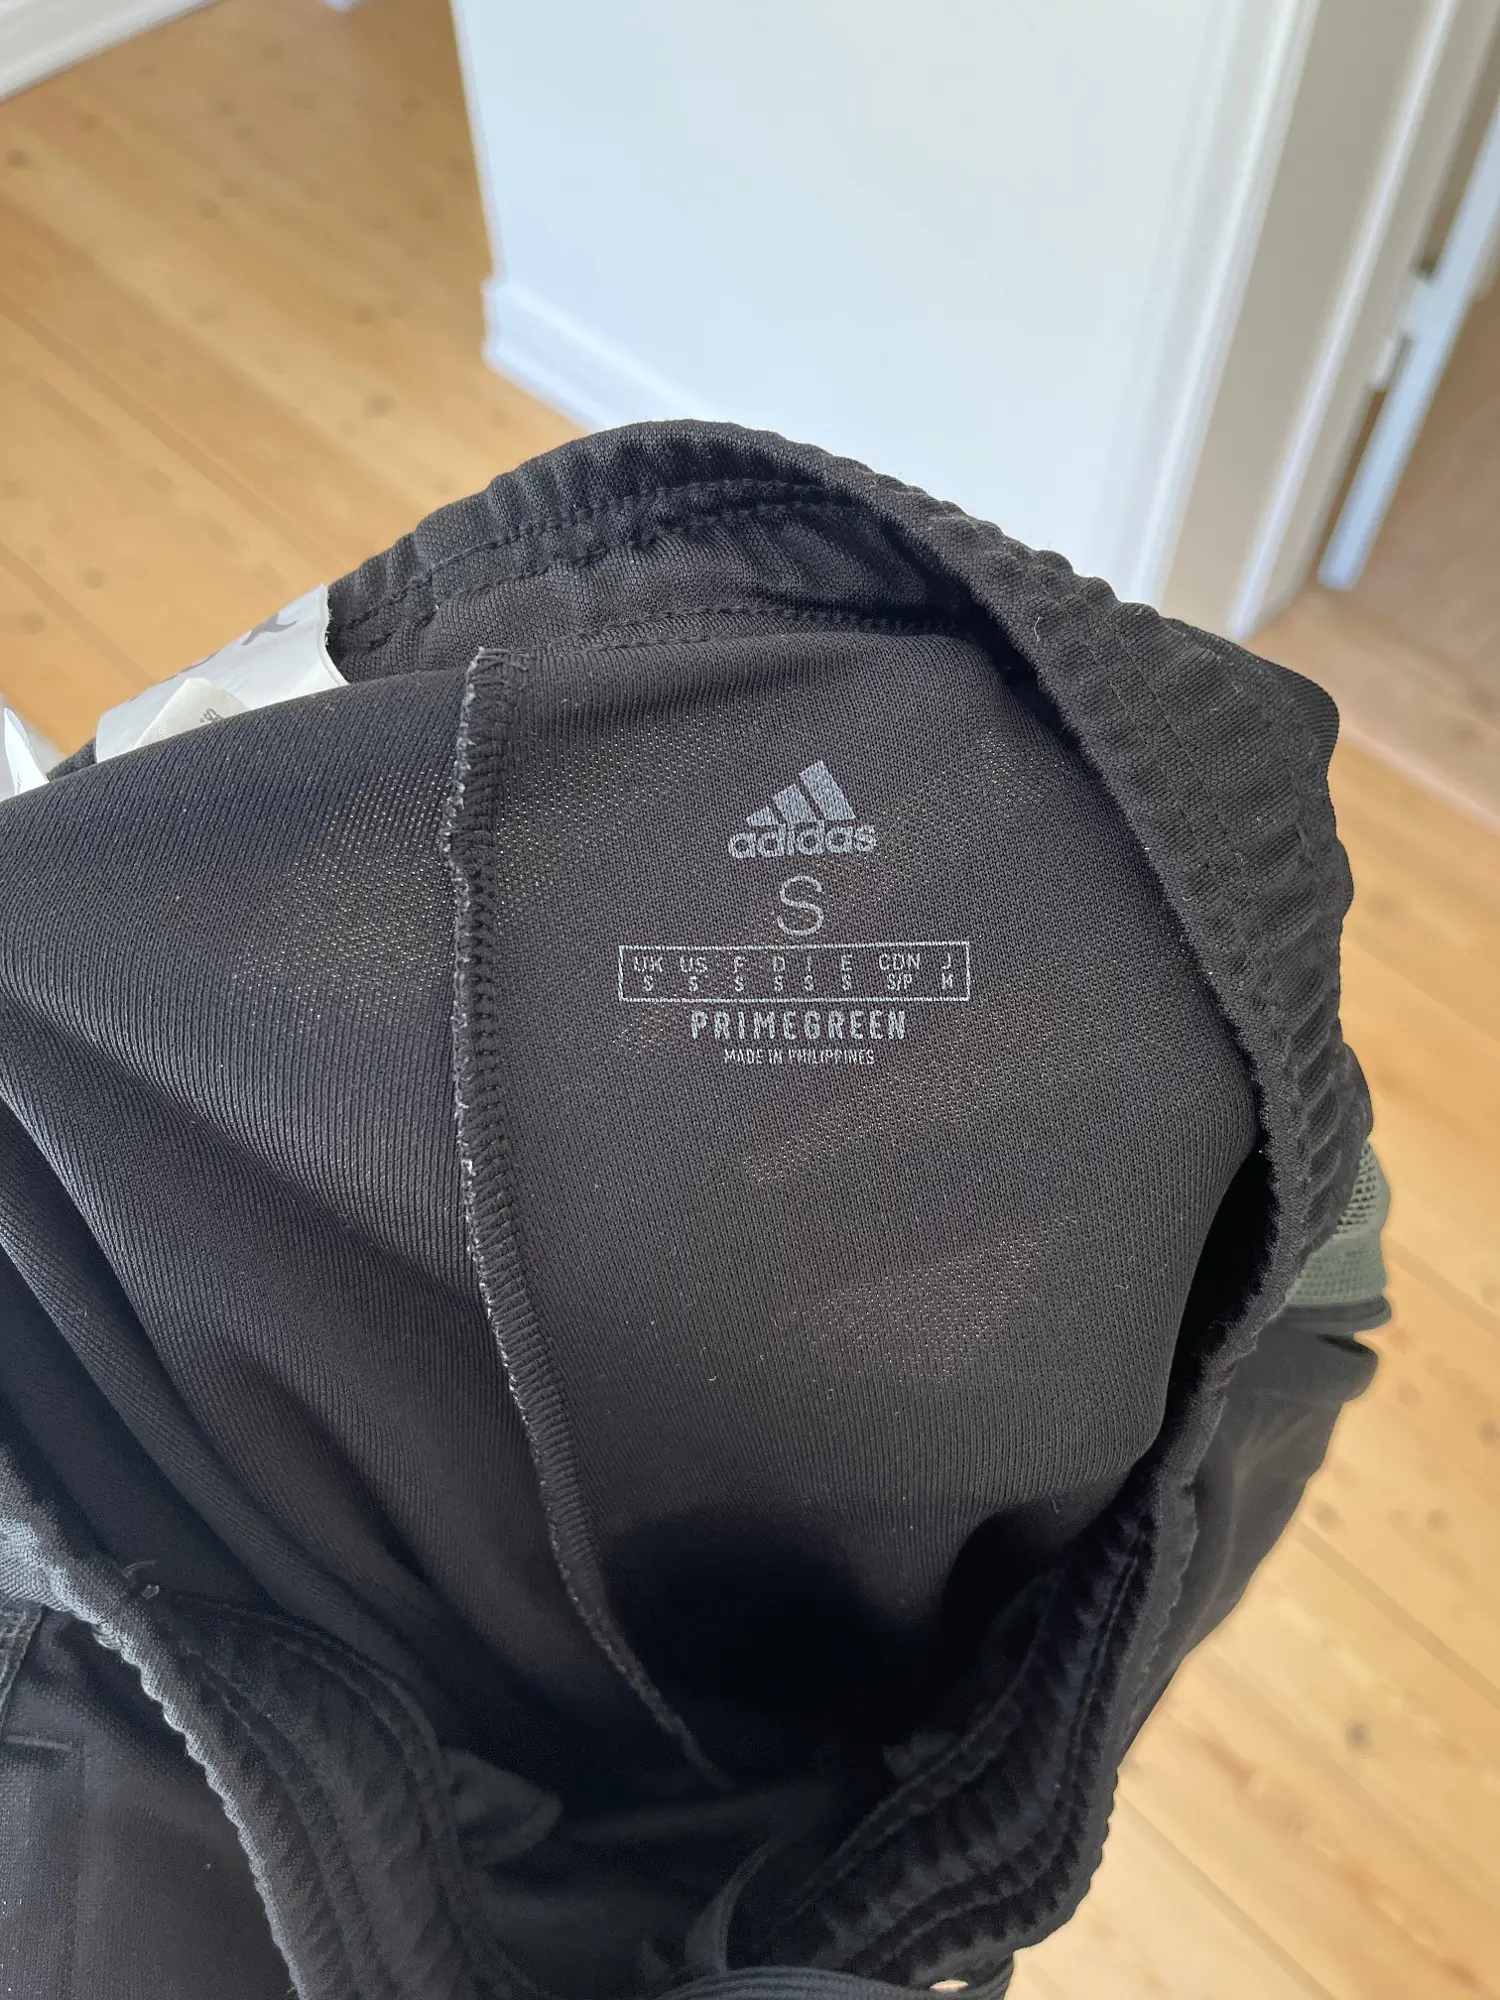 Adidas træningsbukser